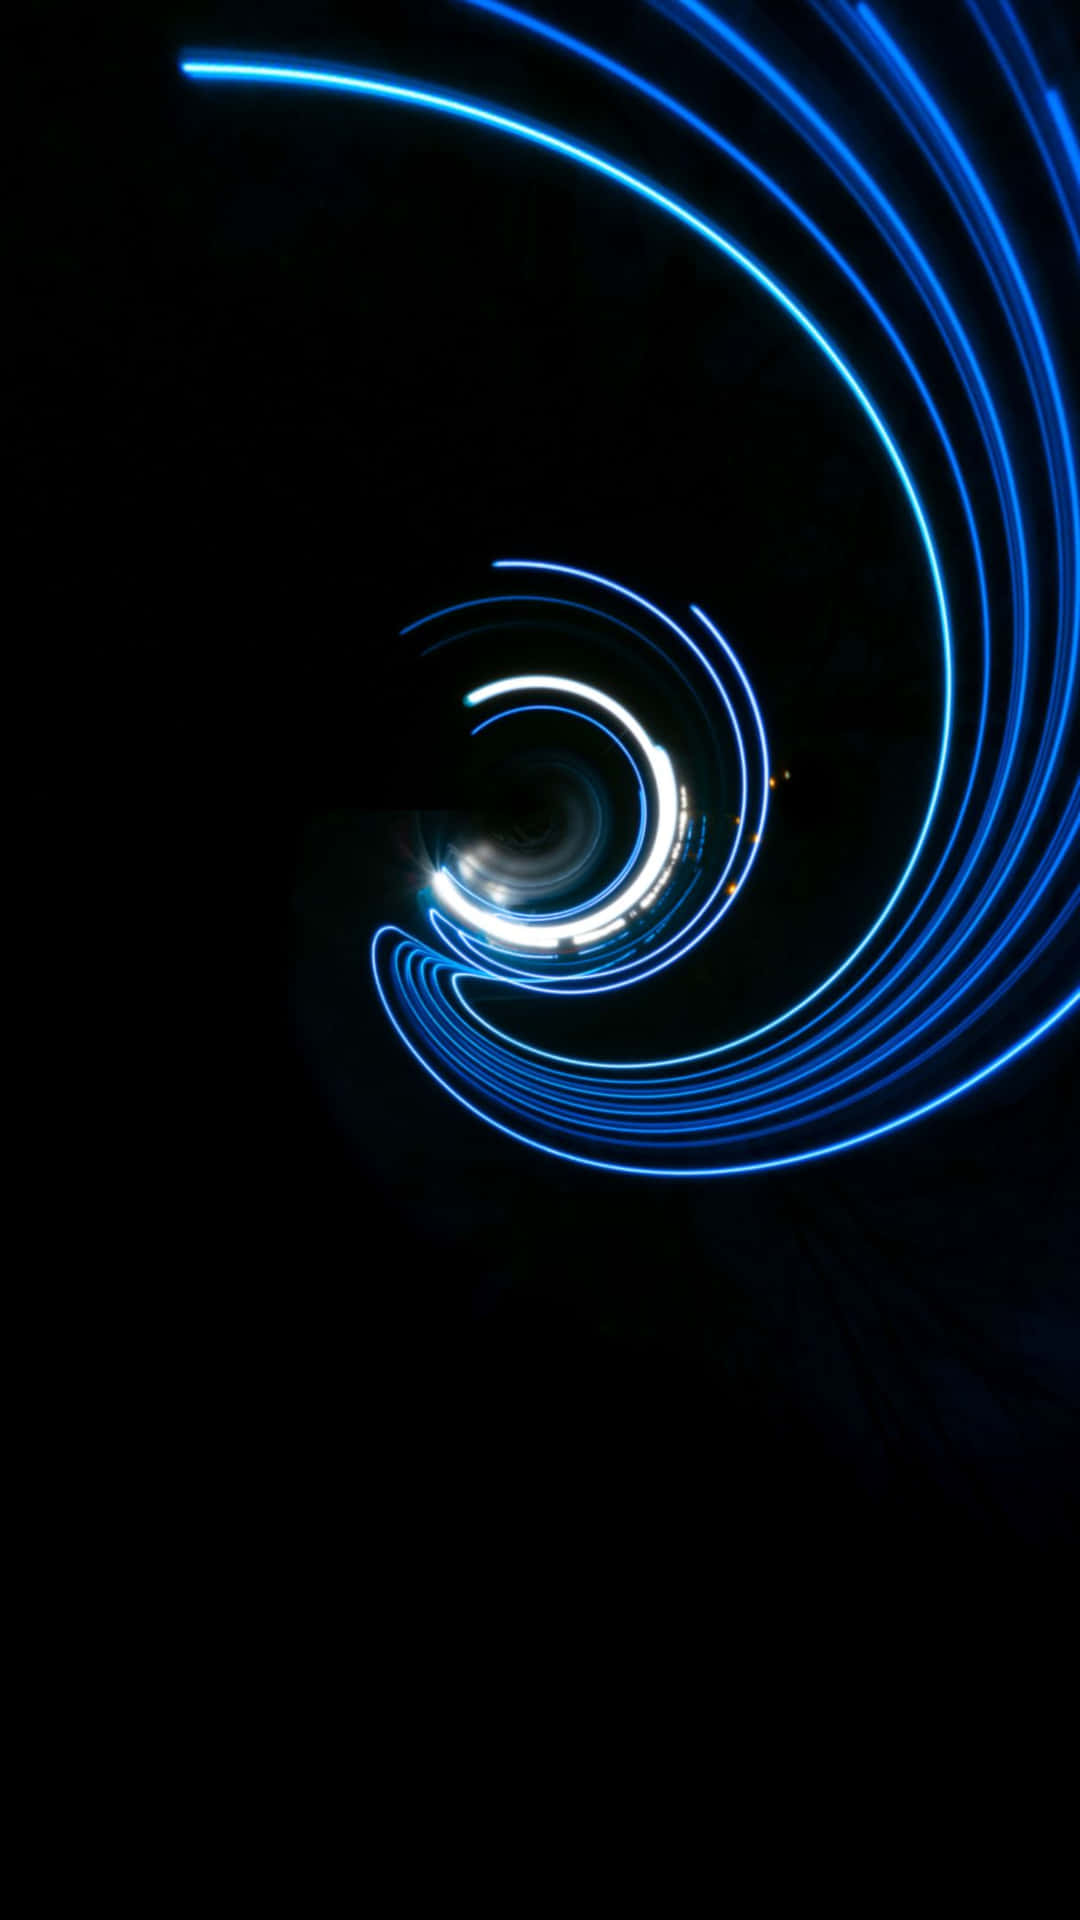 Cycle Through a Blue Swirl